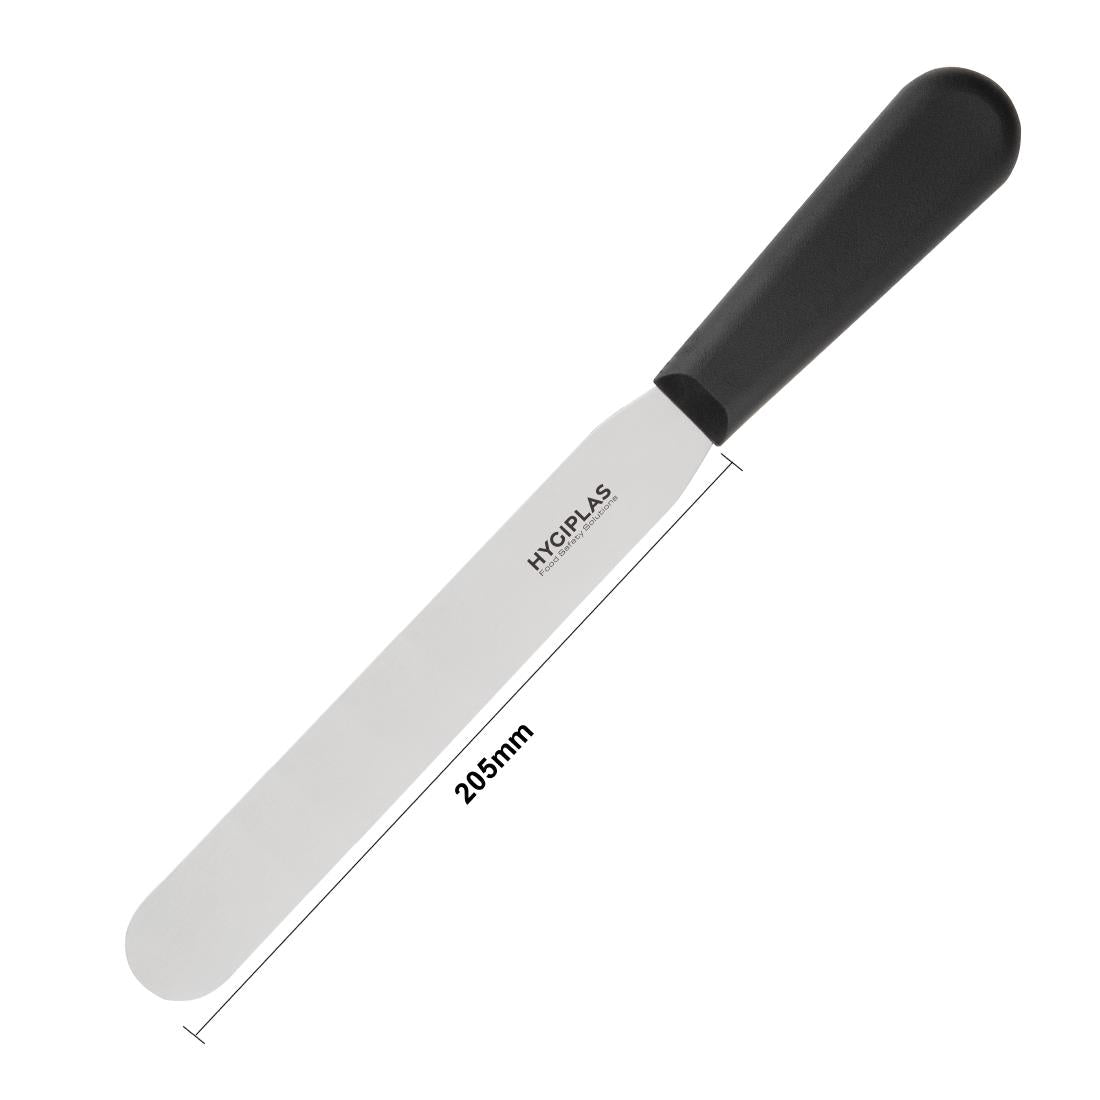 D404 Hygiplas Straight Blade Palette Knife Black 20.5cm JD Catering Equipment Solutions Ltd